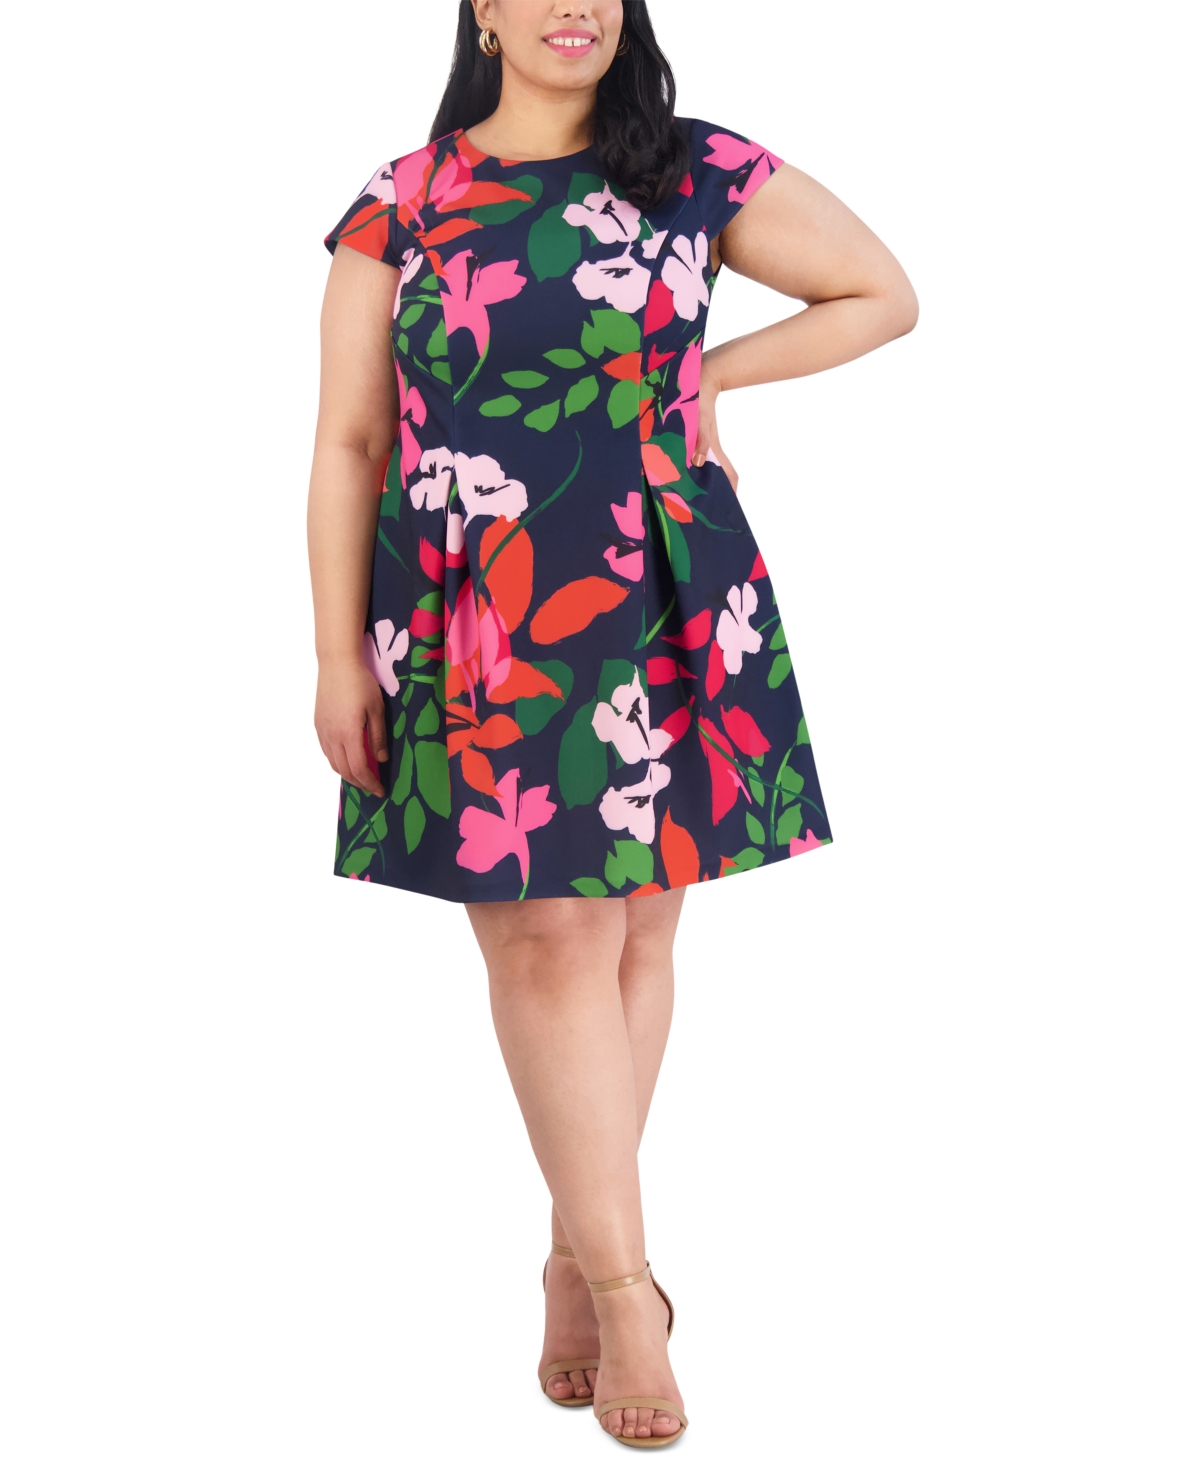 Plus Size Floral-Print Cap-Sleeve Dress - Navy Multi